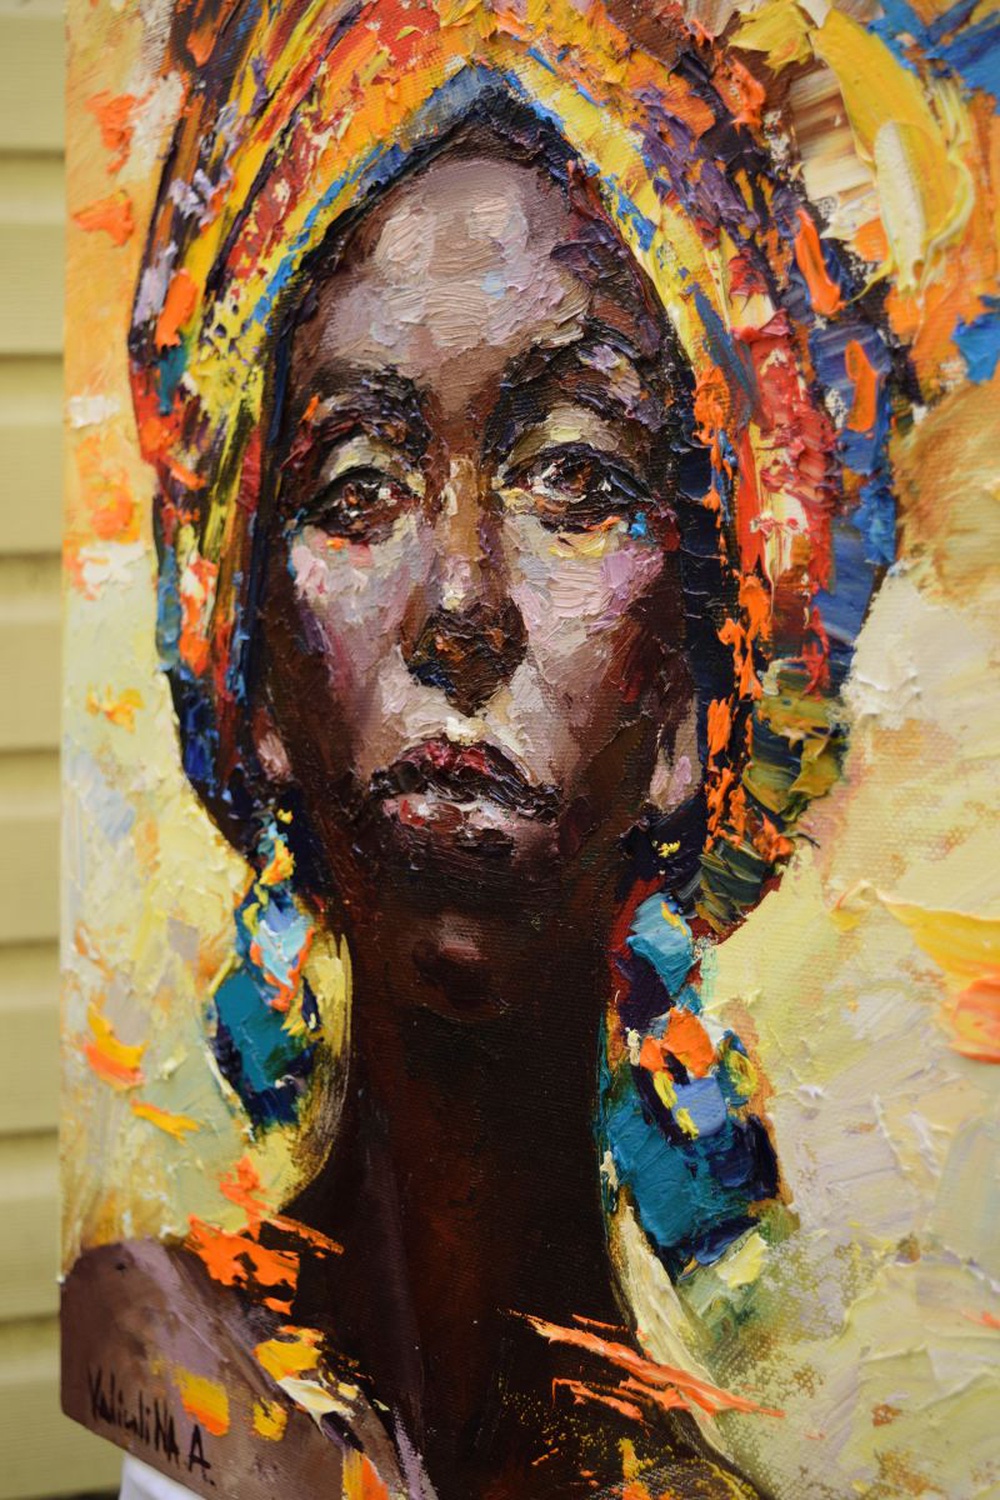 African Woman Portrait Painting Original Oil Painting 2016 Oil